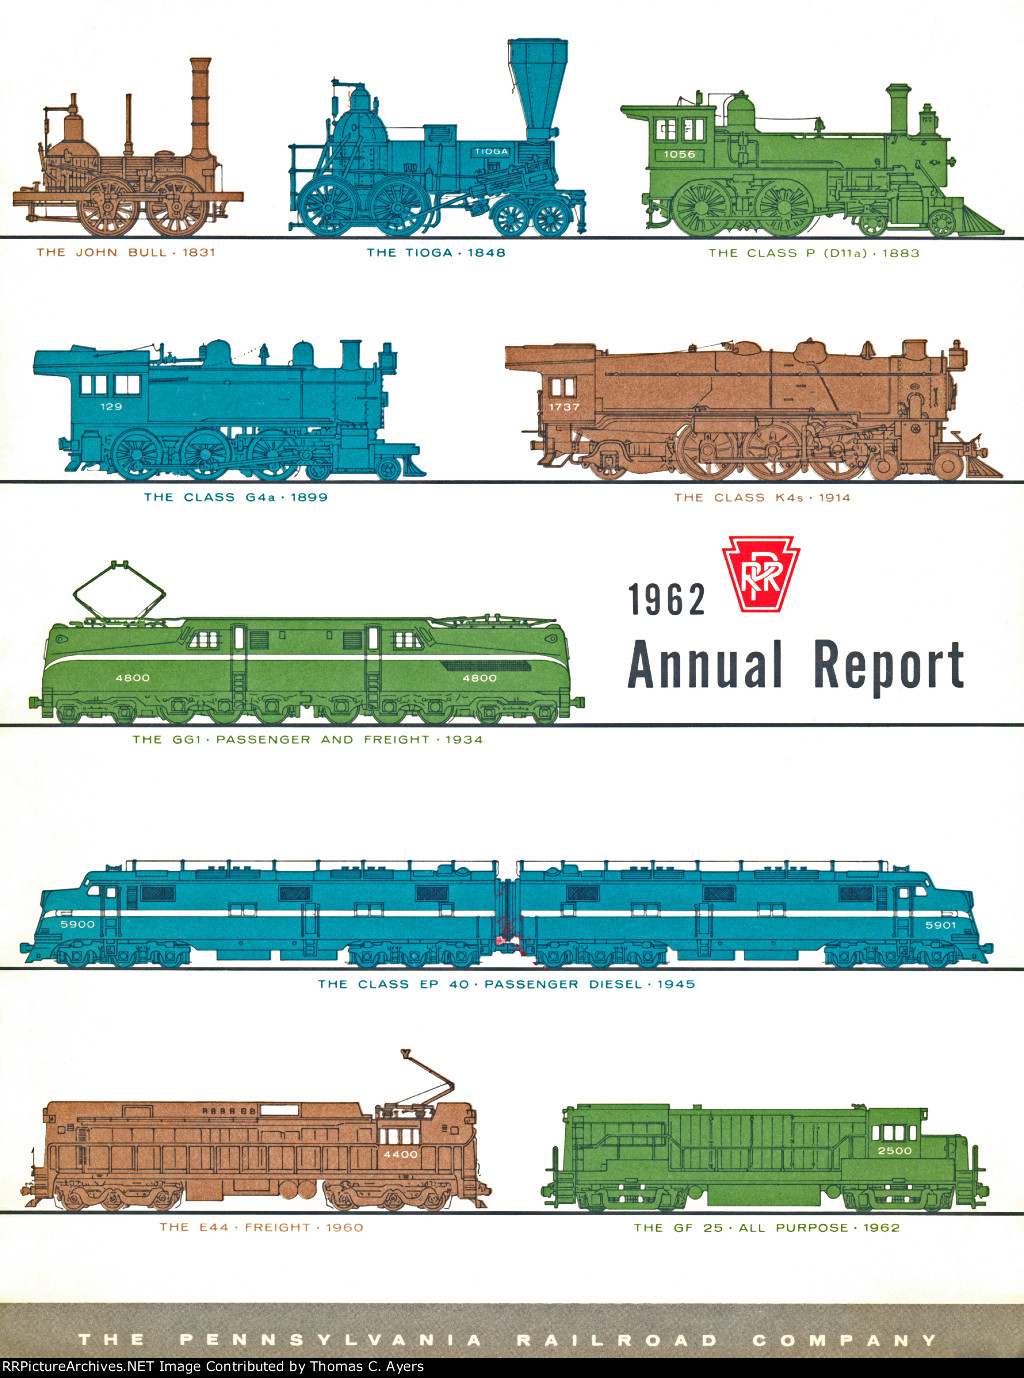 Annual Report Color Cover ~ 1962